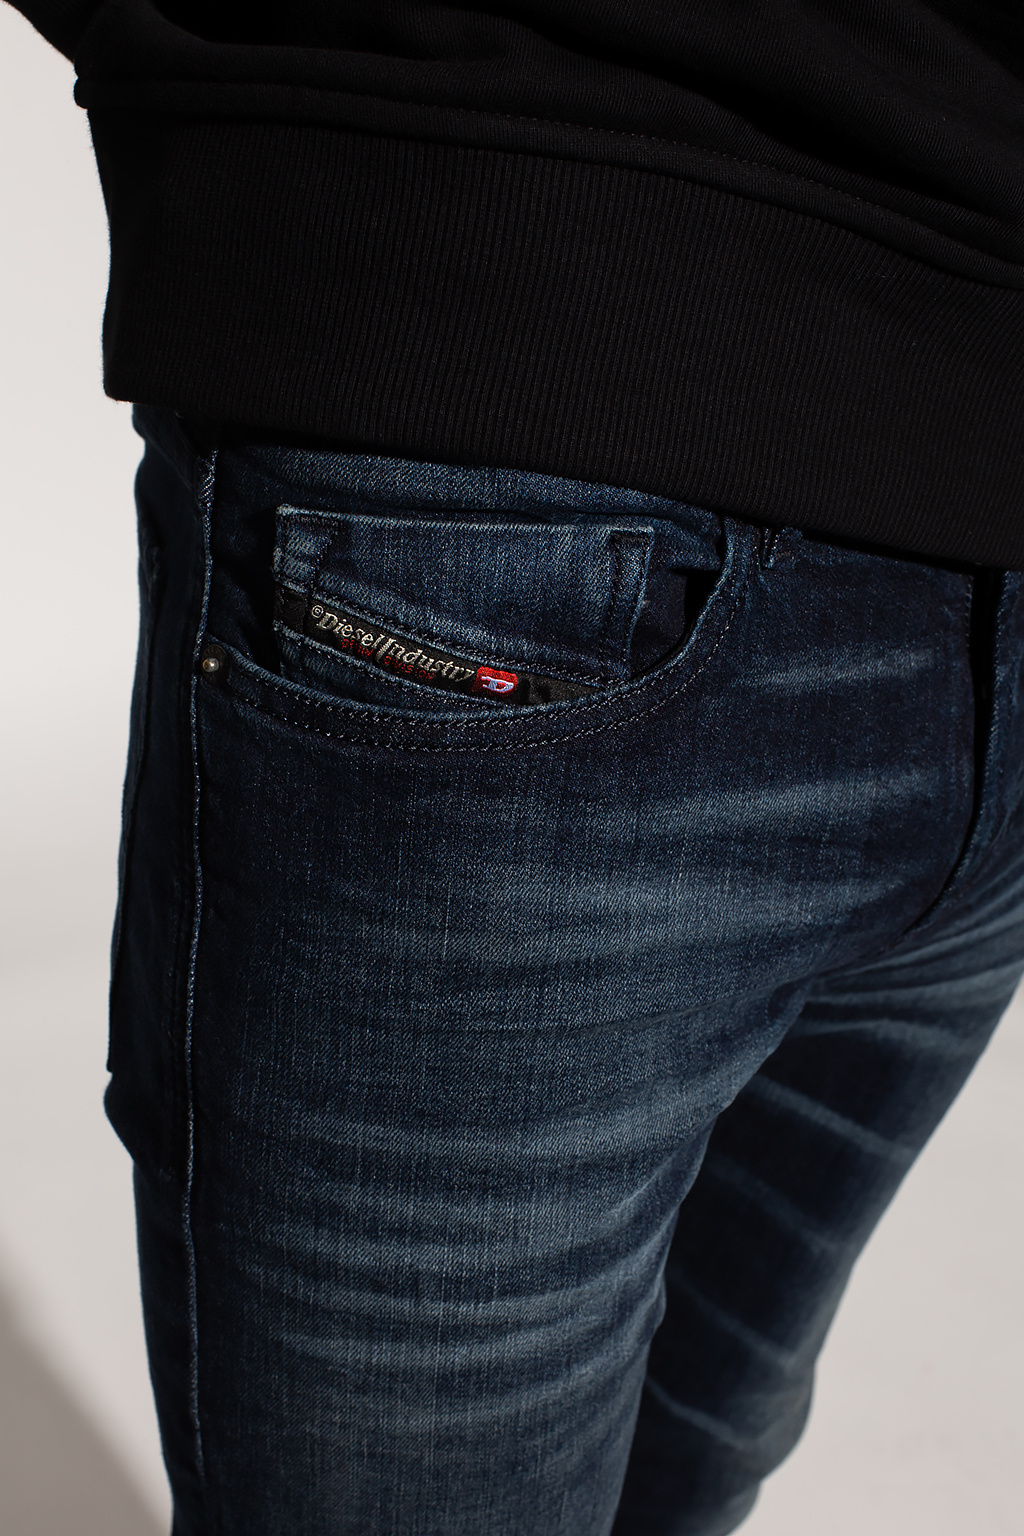 reflecteren Ijver Schuldig Slvrlake Savior slim-fit jeans | IetpShops | Diesel 'Sleenker' skinny jeans  | Men's Clothing